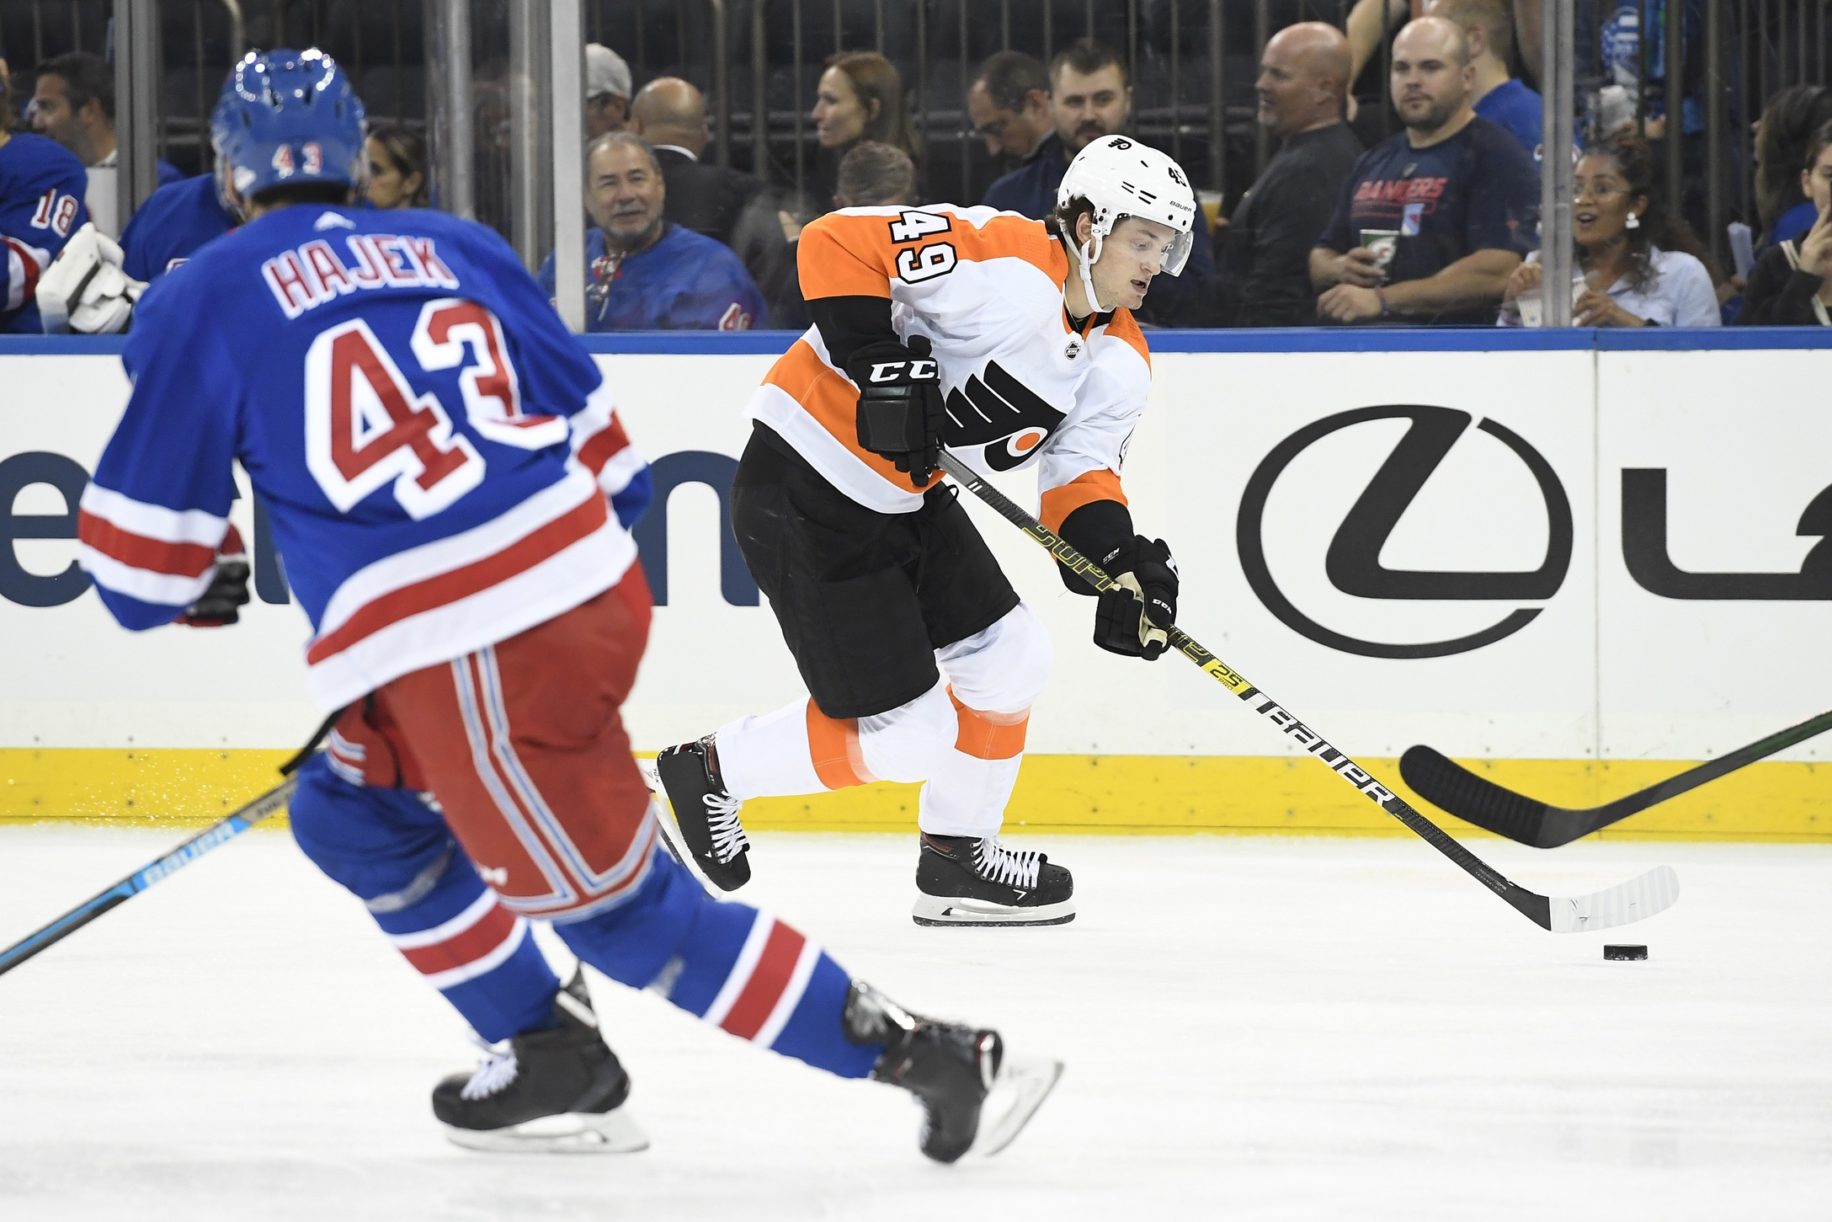 The Flyers’ Future Looks Bright Ahead of the 2019-20 Season